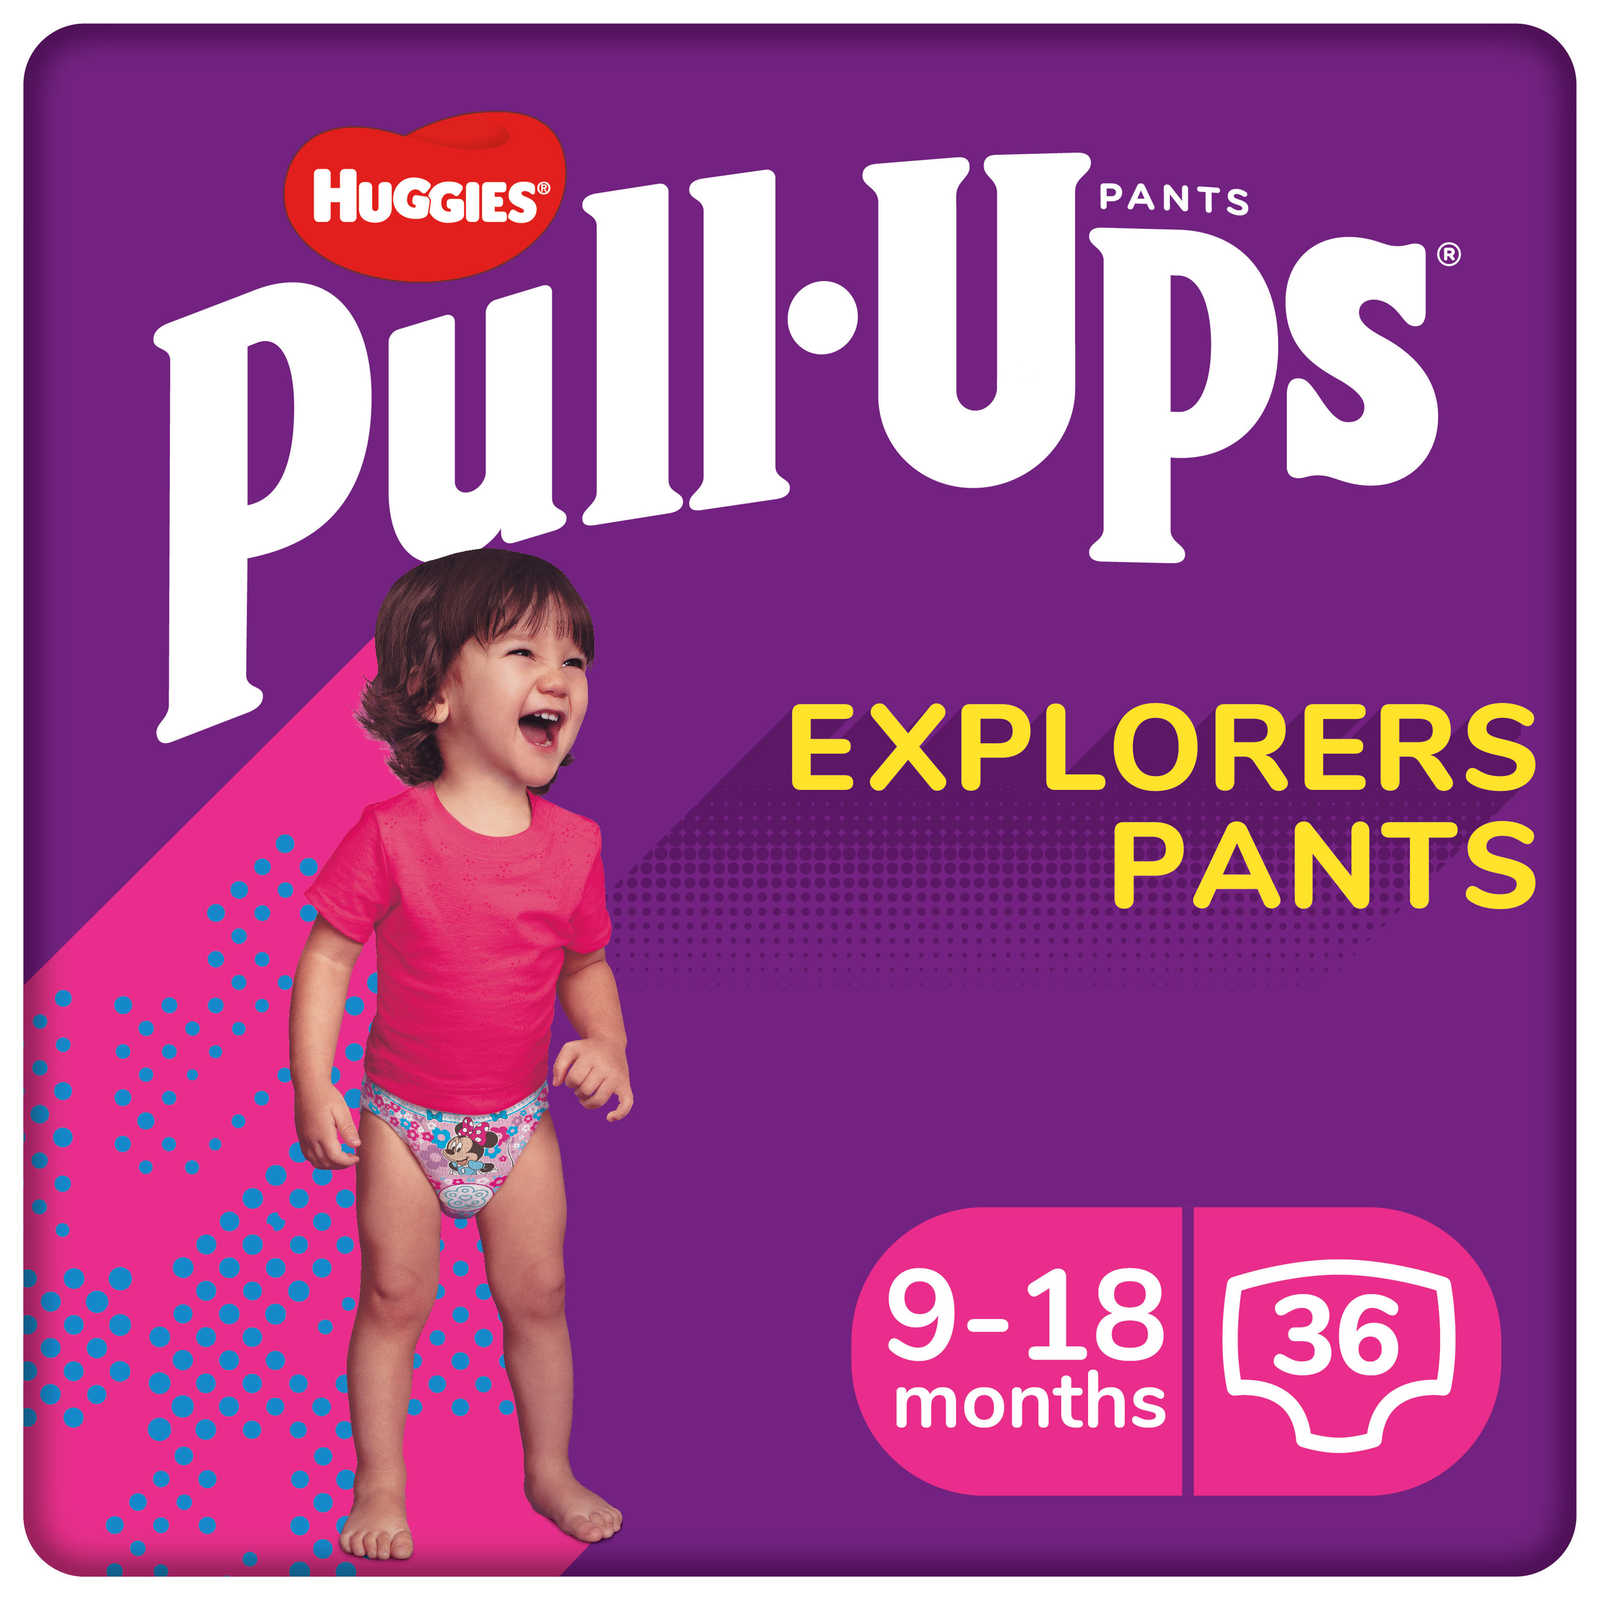 Huggies-Pull-Ups